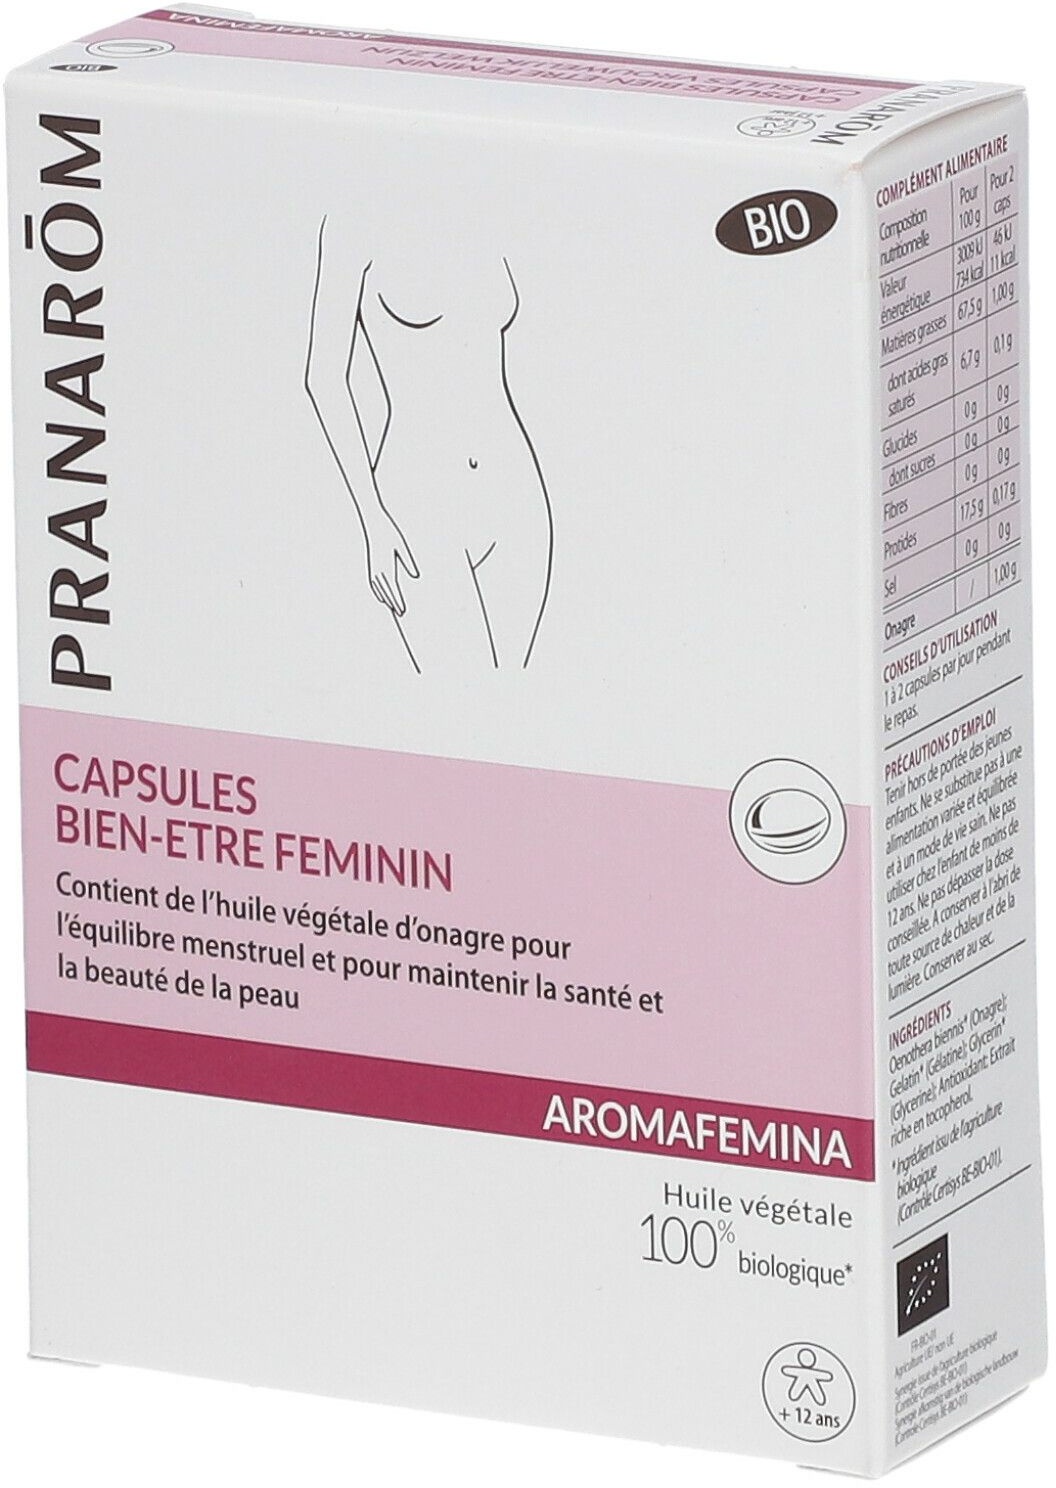 PRANAROM Bien être féminin capsules bio 30 pc(s) capsule(s)